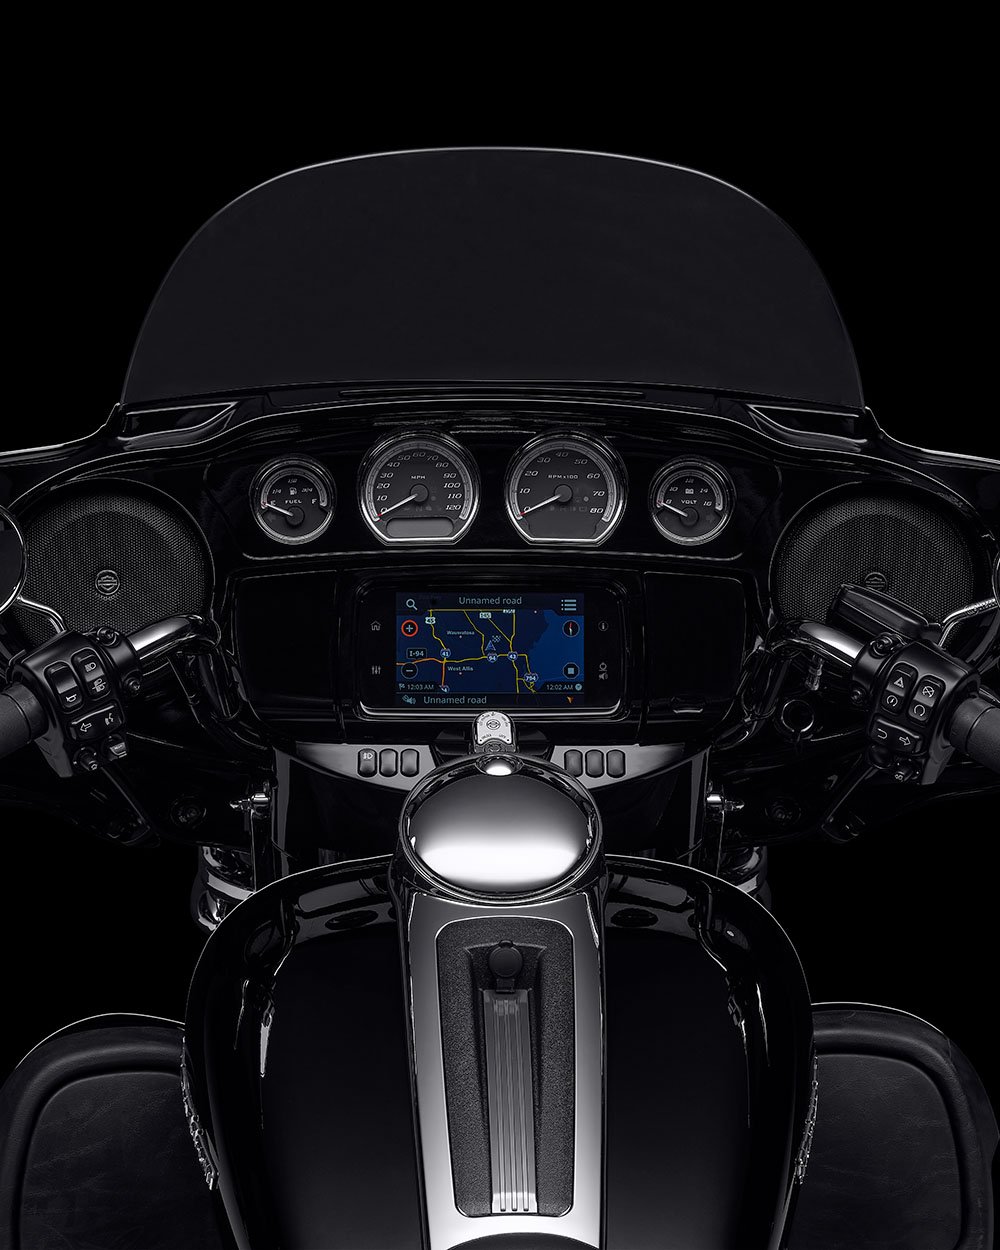 Sistema infotainment Boom!™ Box GTS en motocicleta Ultra Limited 2020